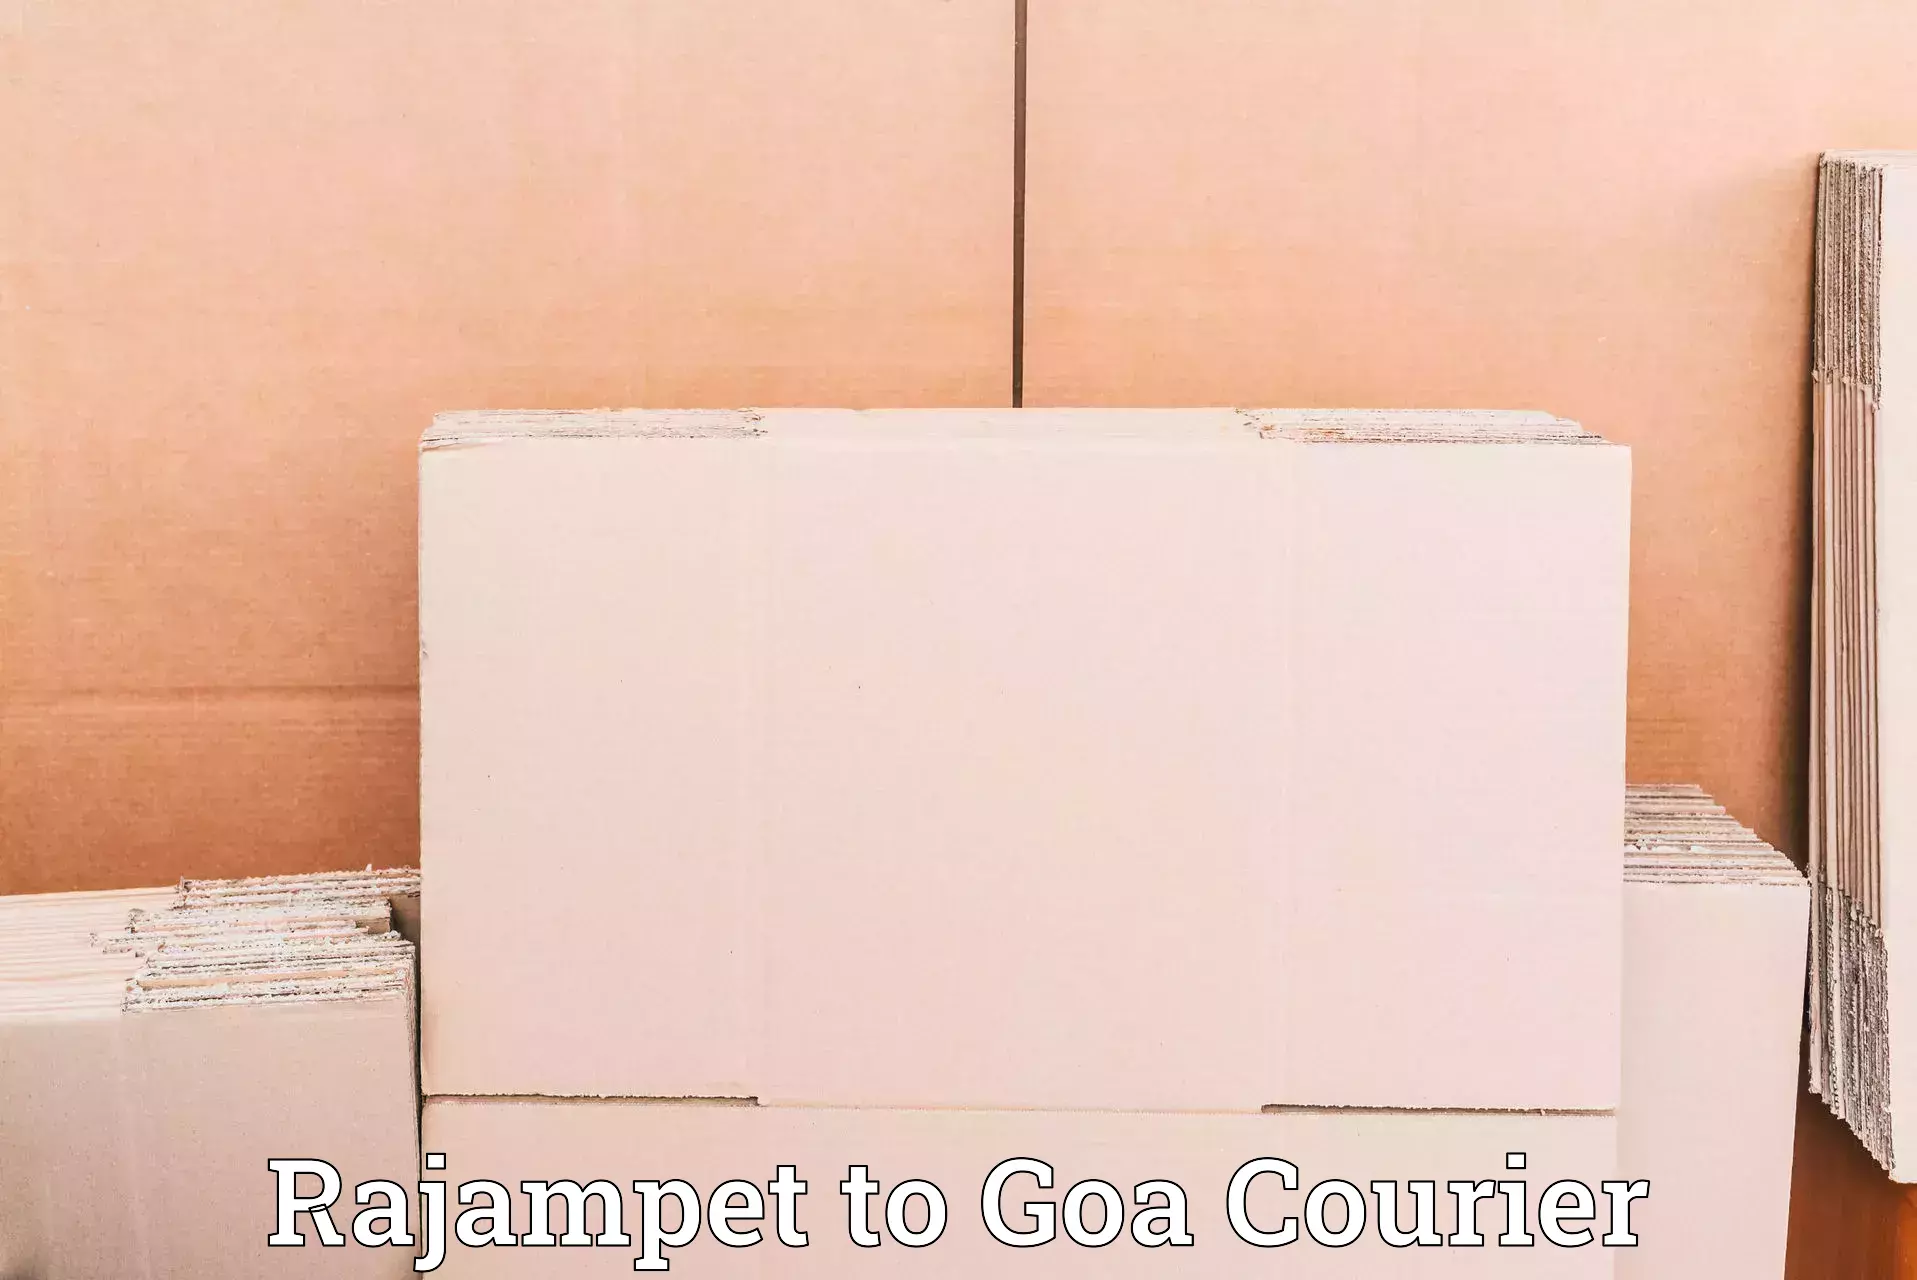 Global logistics network Rajampet to Goa